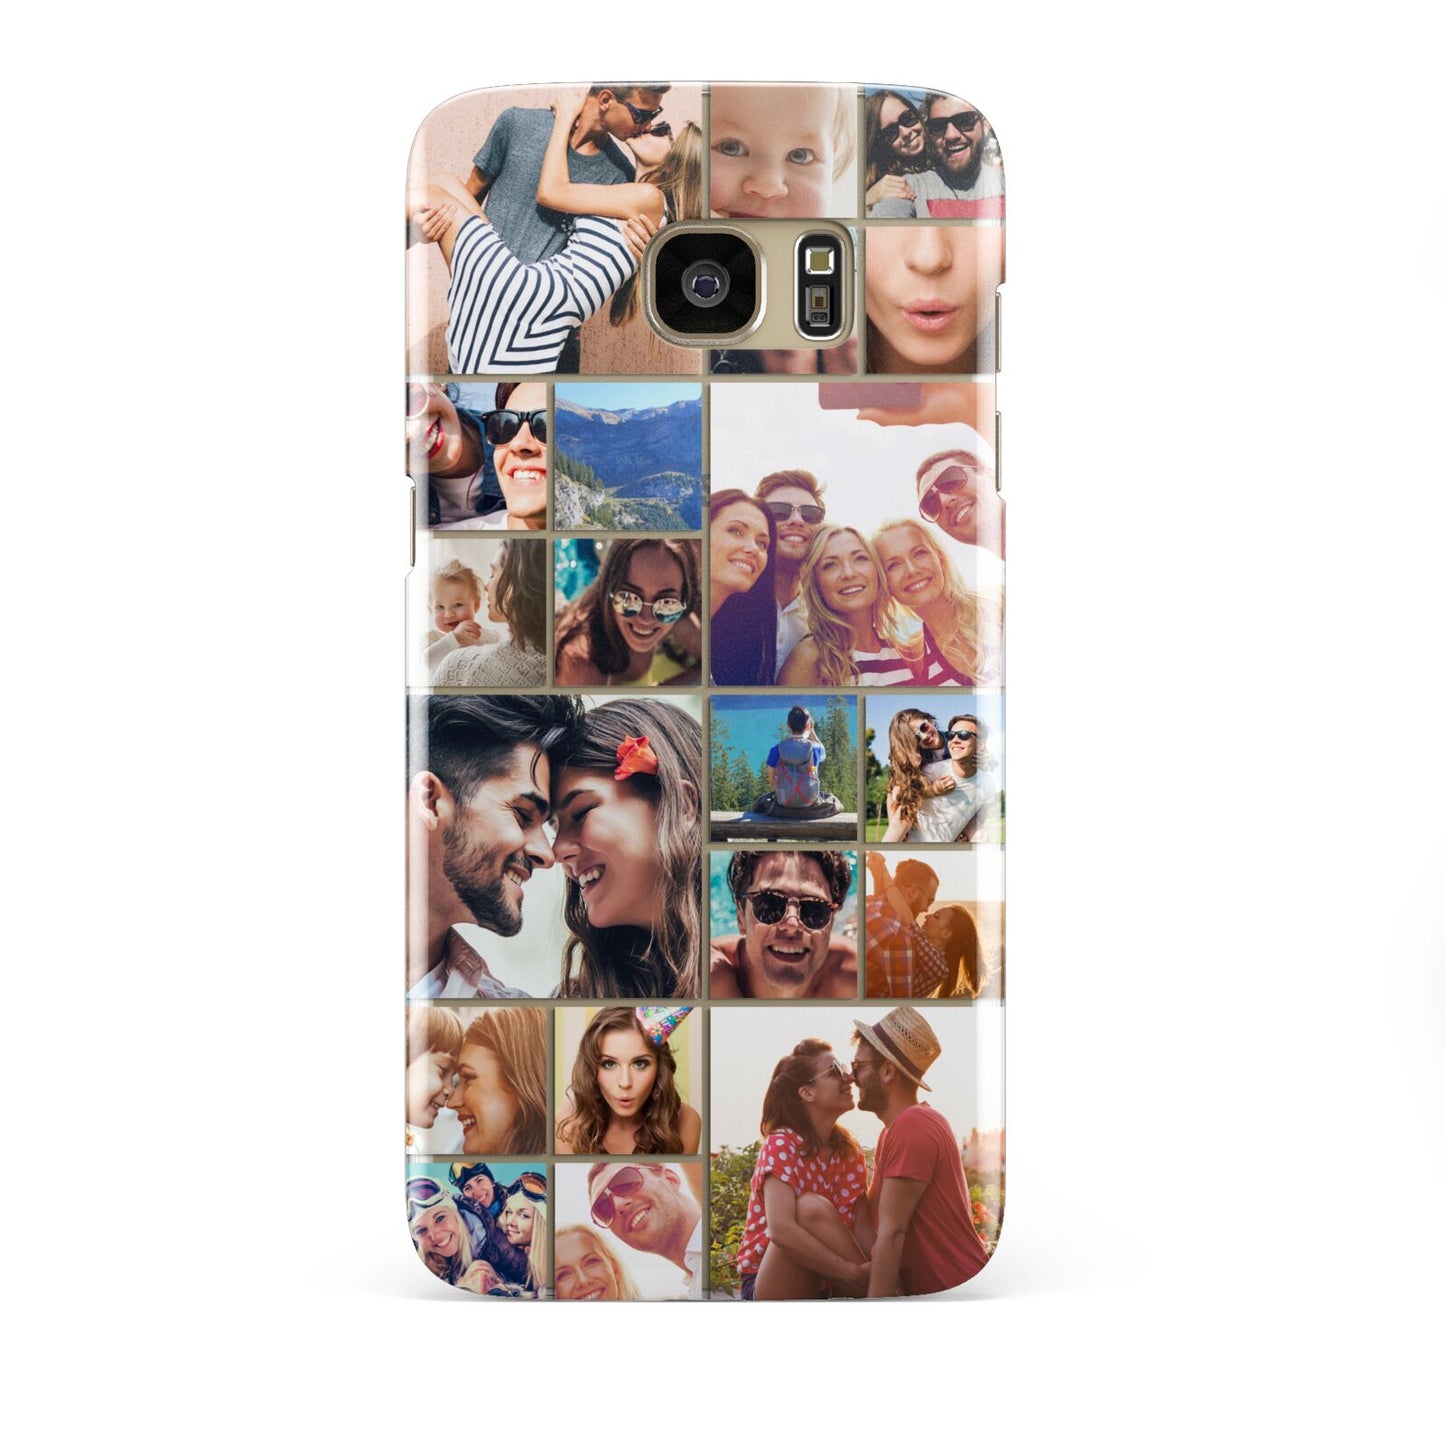 Photo Grid Samsung Galaxy S7 Edge Case